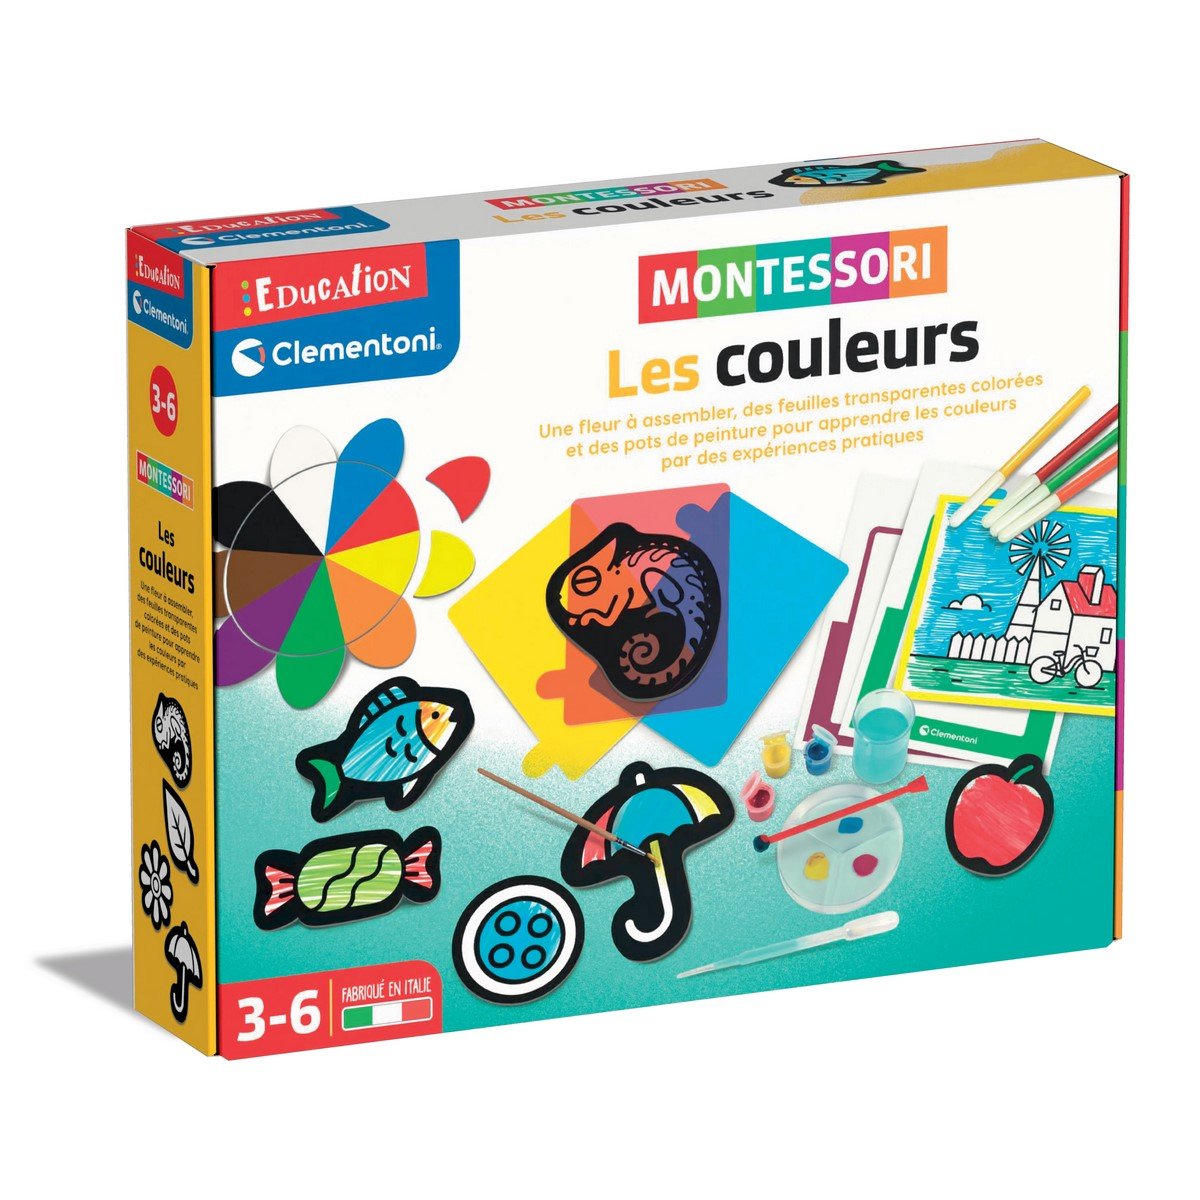 Circuit educatif Montessori - Boutique inspirée de la pédagogie Montessori